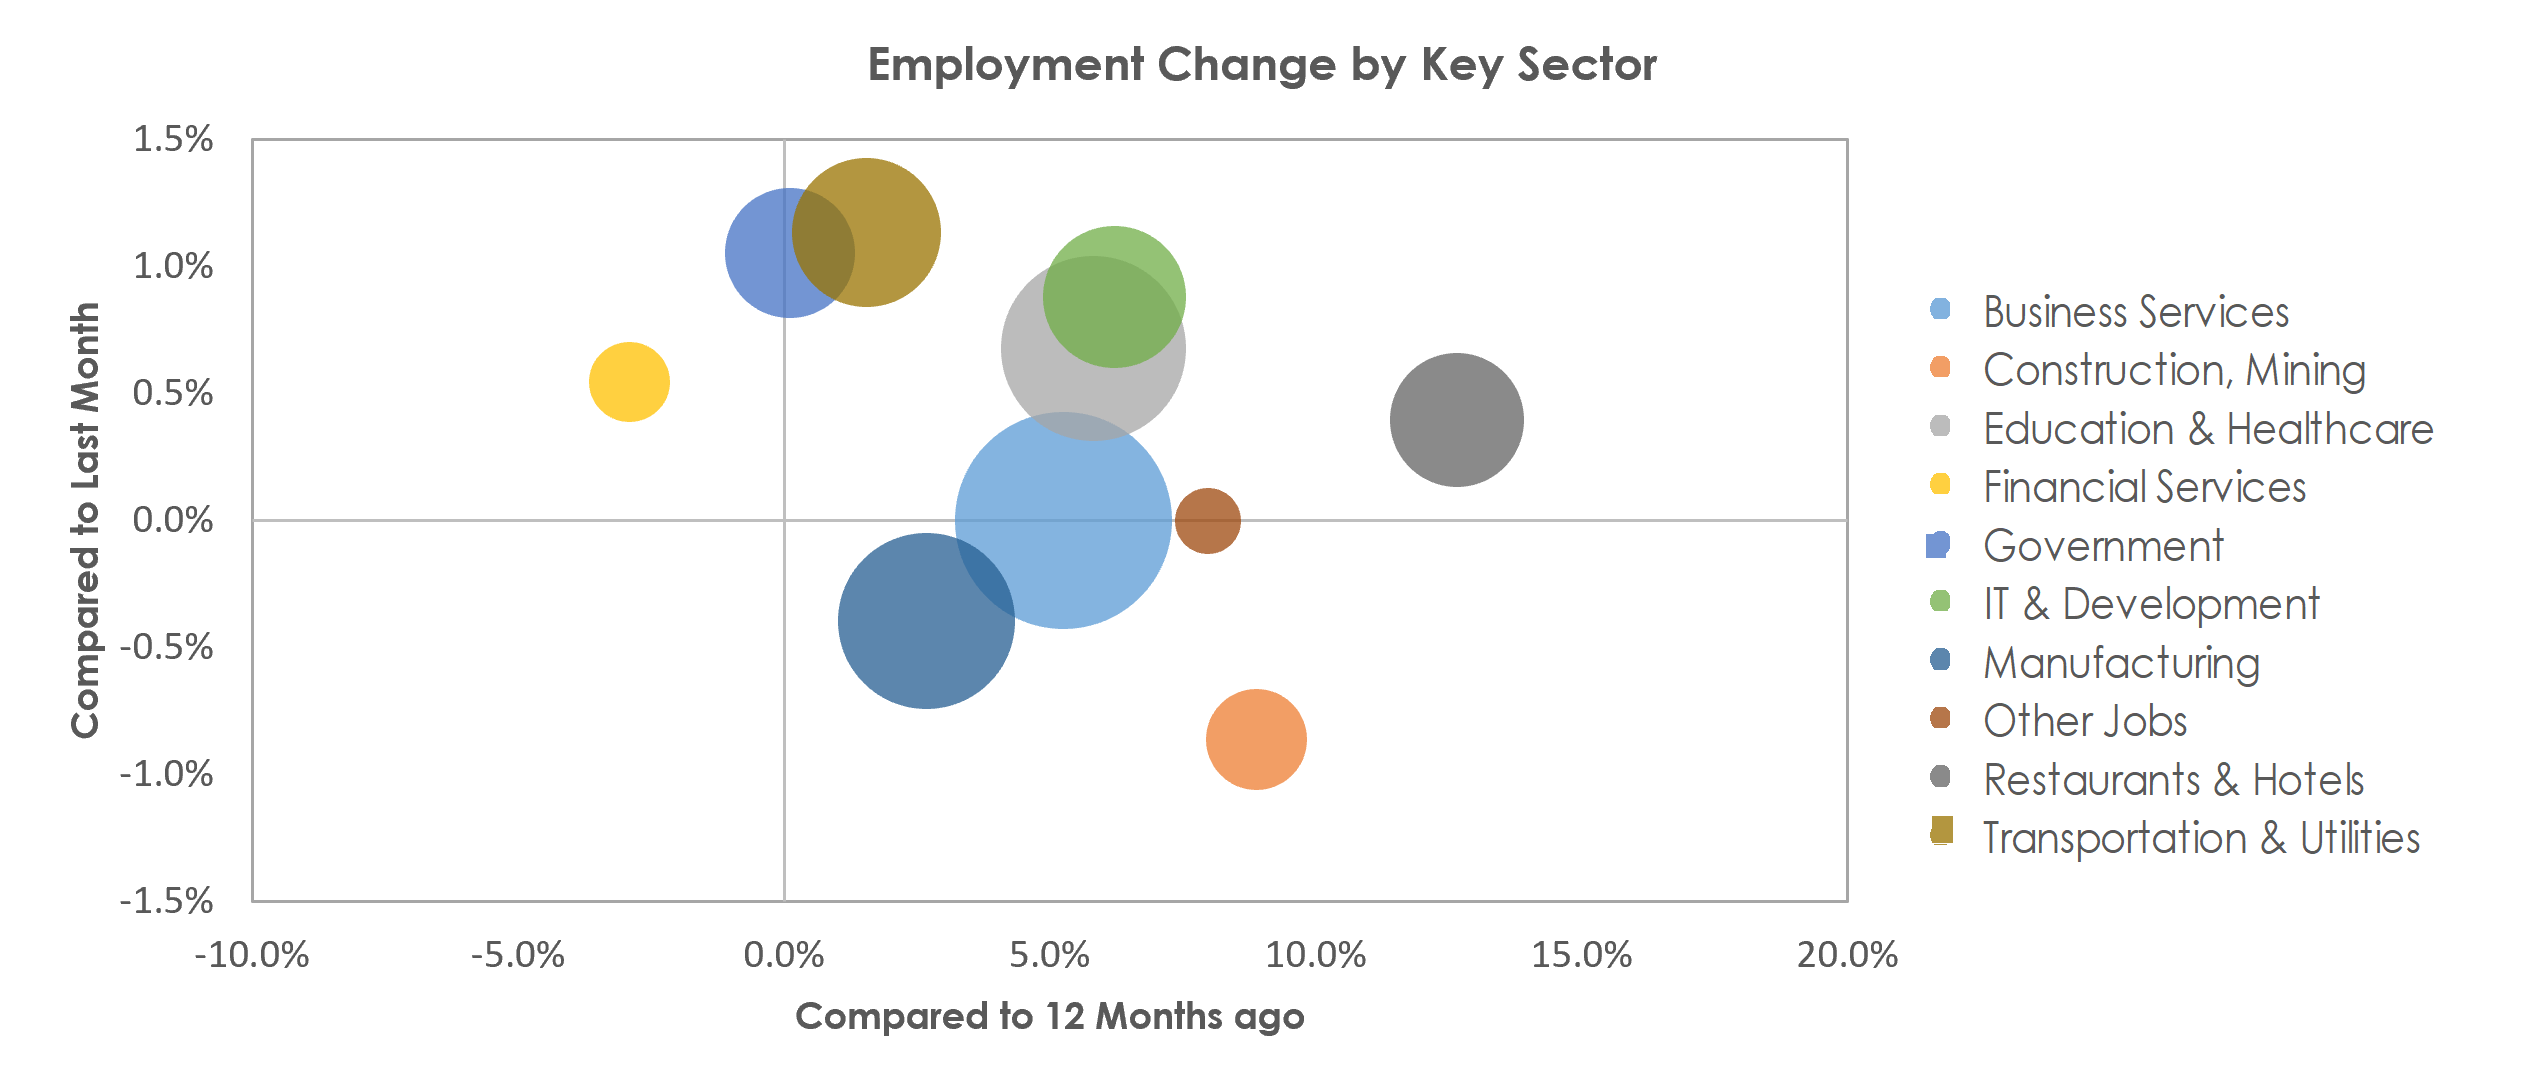 San Jose-Sunnyvale-Santa Clara, CA Unemployment by Industry November 2022